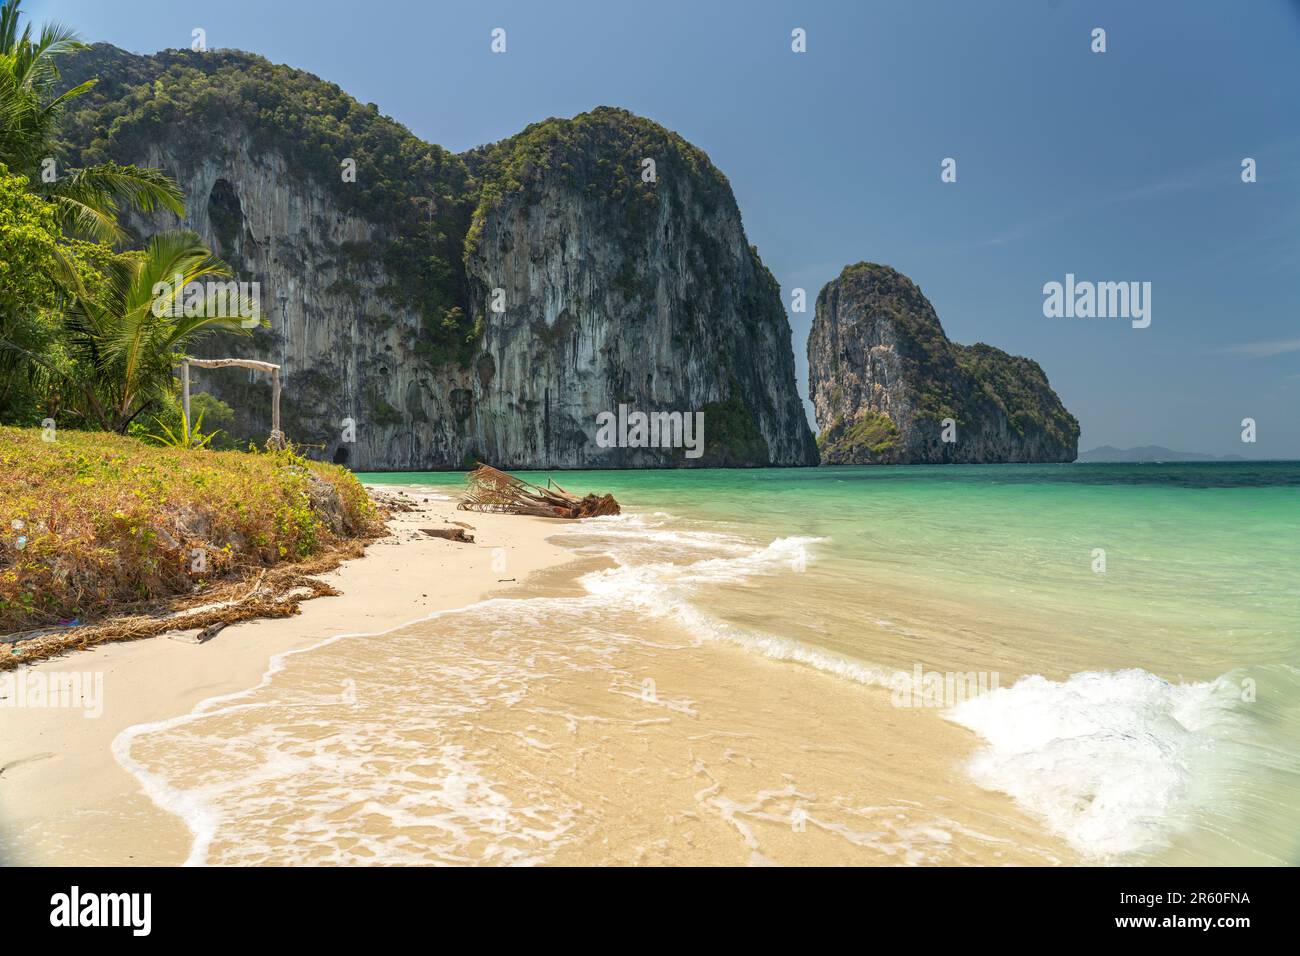 Steile Karstfelsen und Strand der Insel Koh Lao Liang, Thailand, Asien   |  limestone cliffs and beach of Ko Lao Liang islands, Thailand, Asia Stock Photo